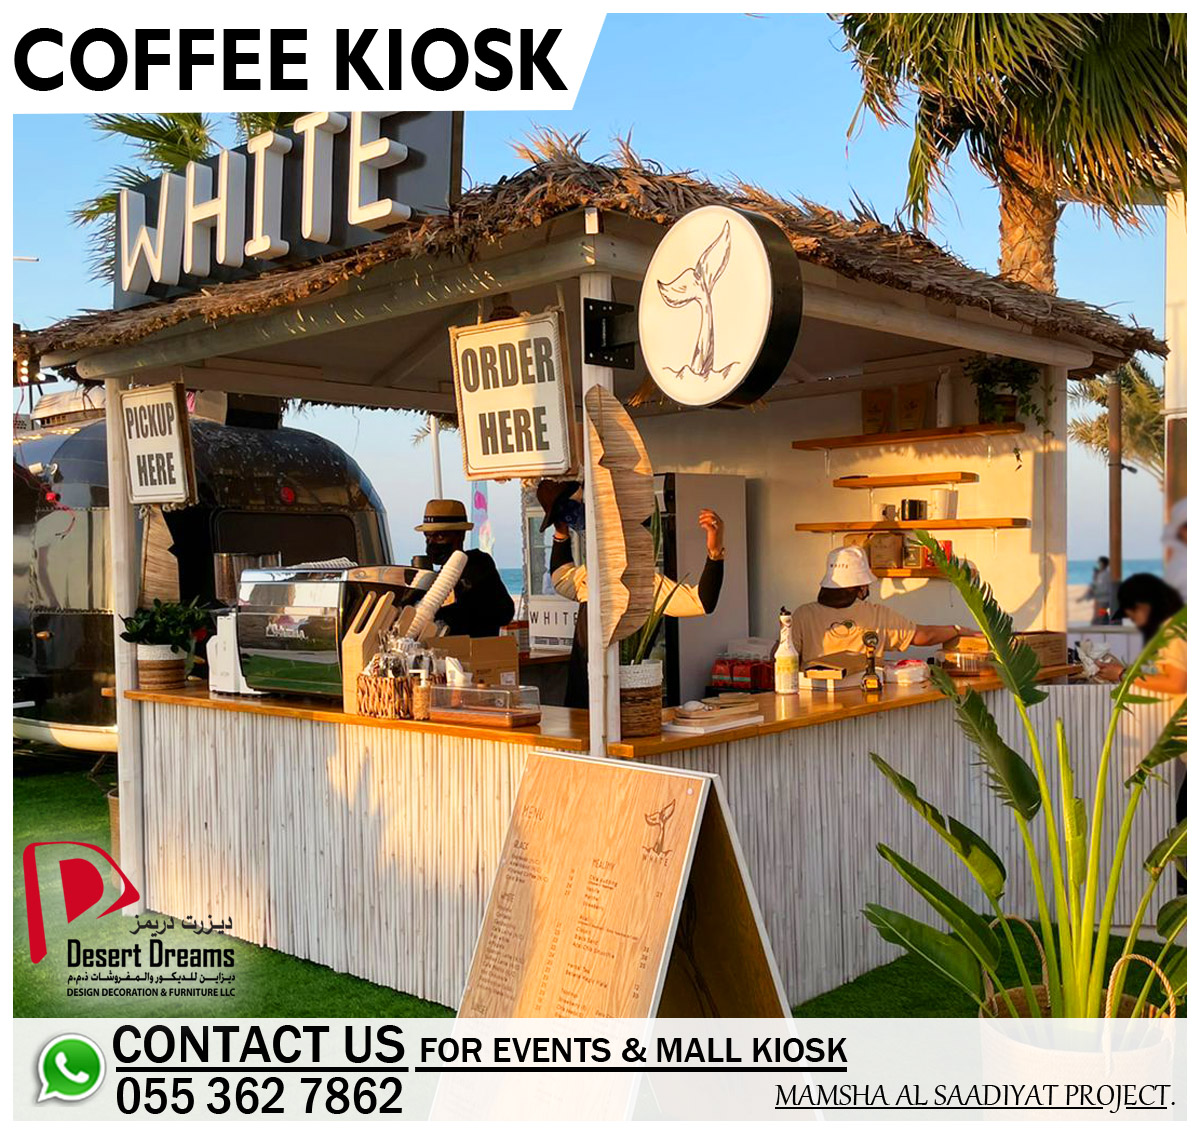 Coffee Kiosk_Events Kiosk Manufacturer in UAE.jpg